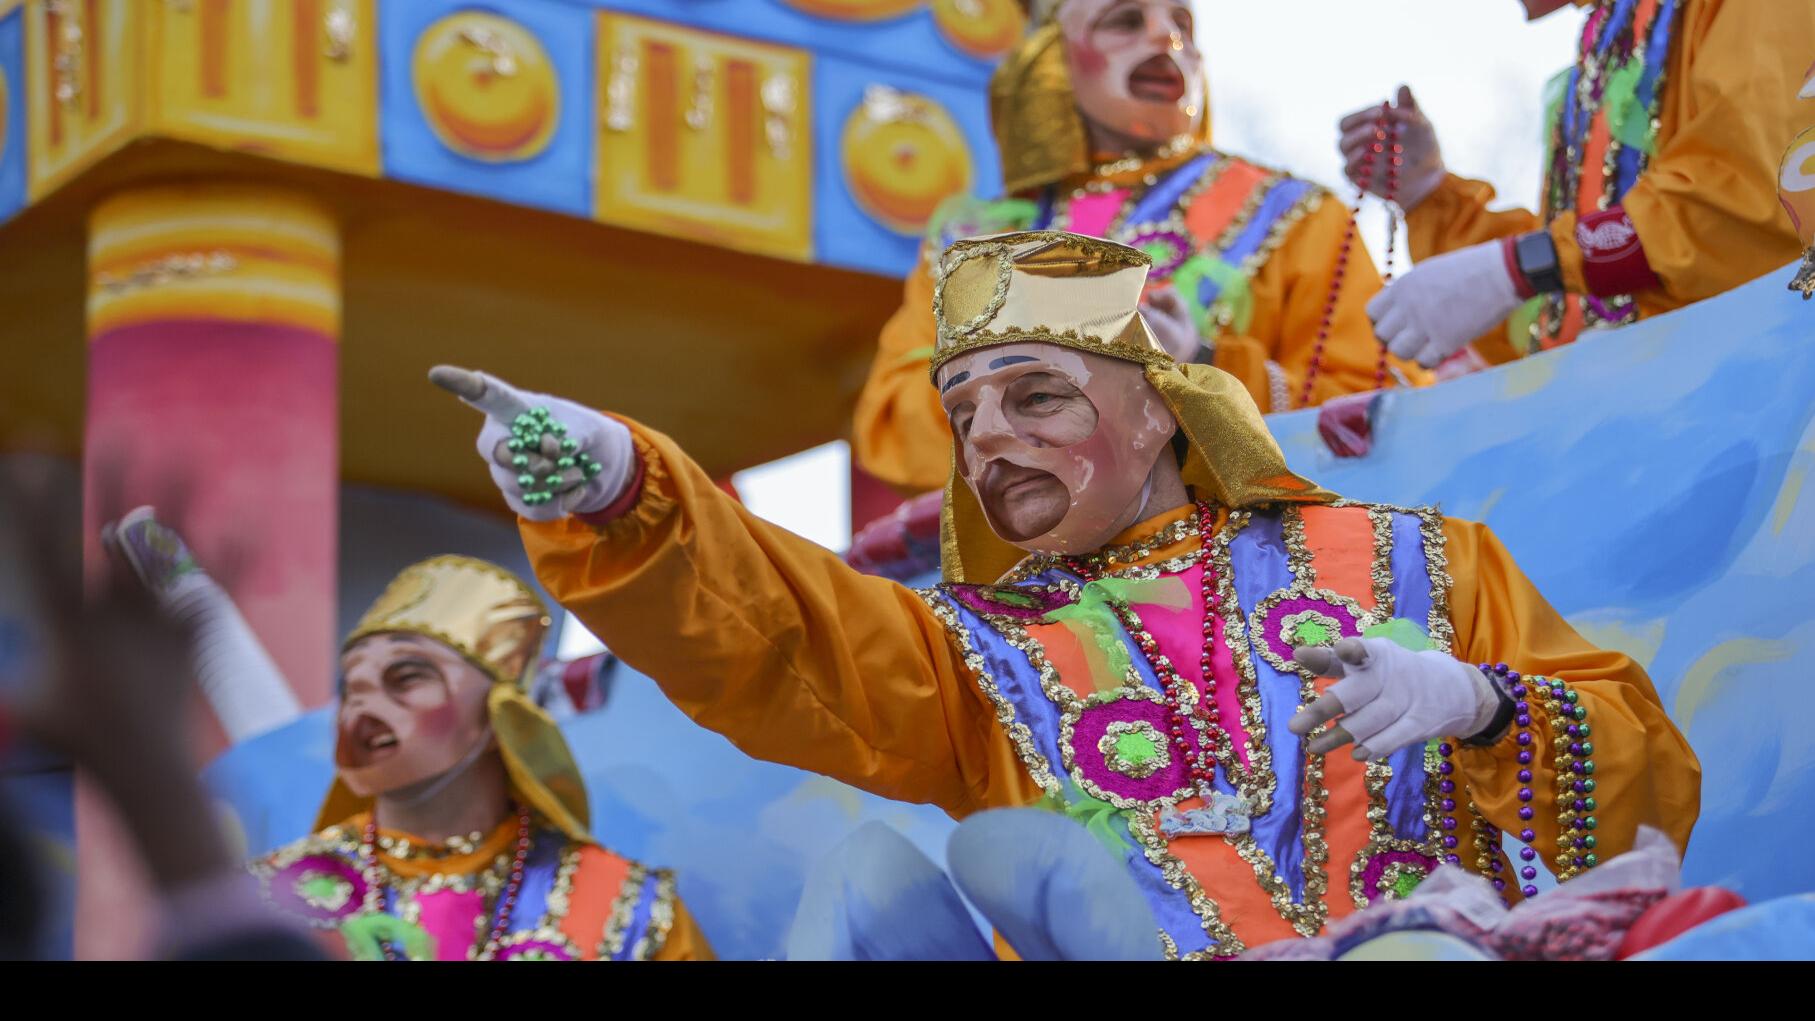 Colorful Mardi Gras Costumes for Women